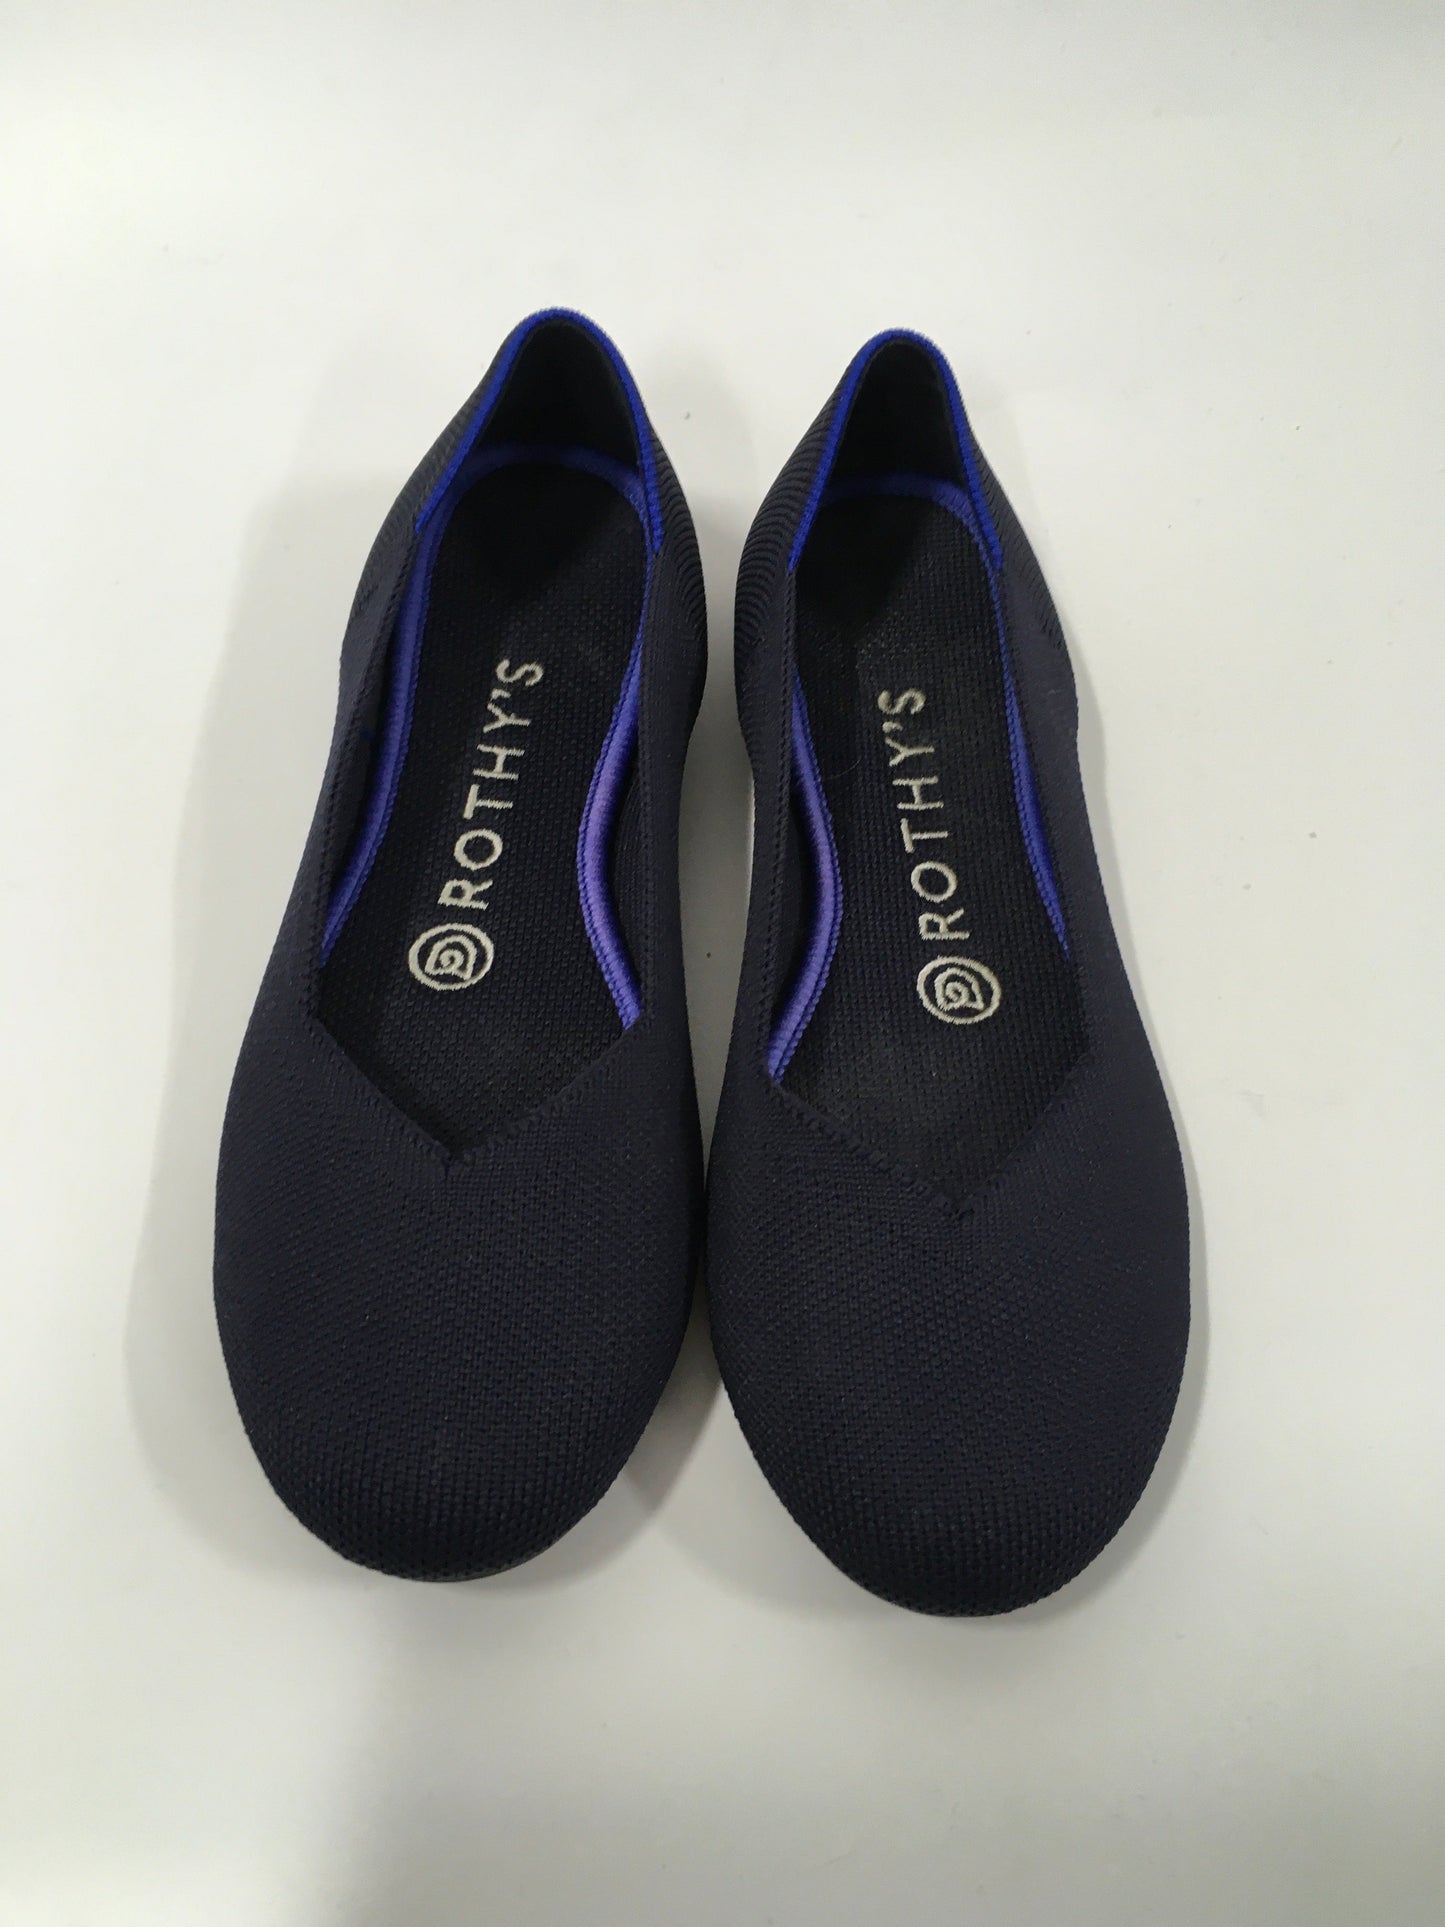 Navy Shoes Flats Ballet Rothys, Size 6.5